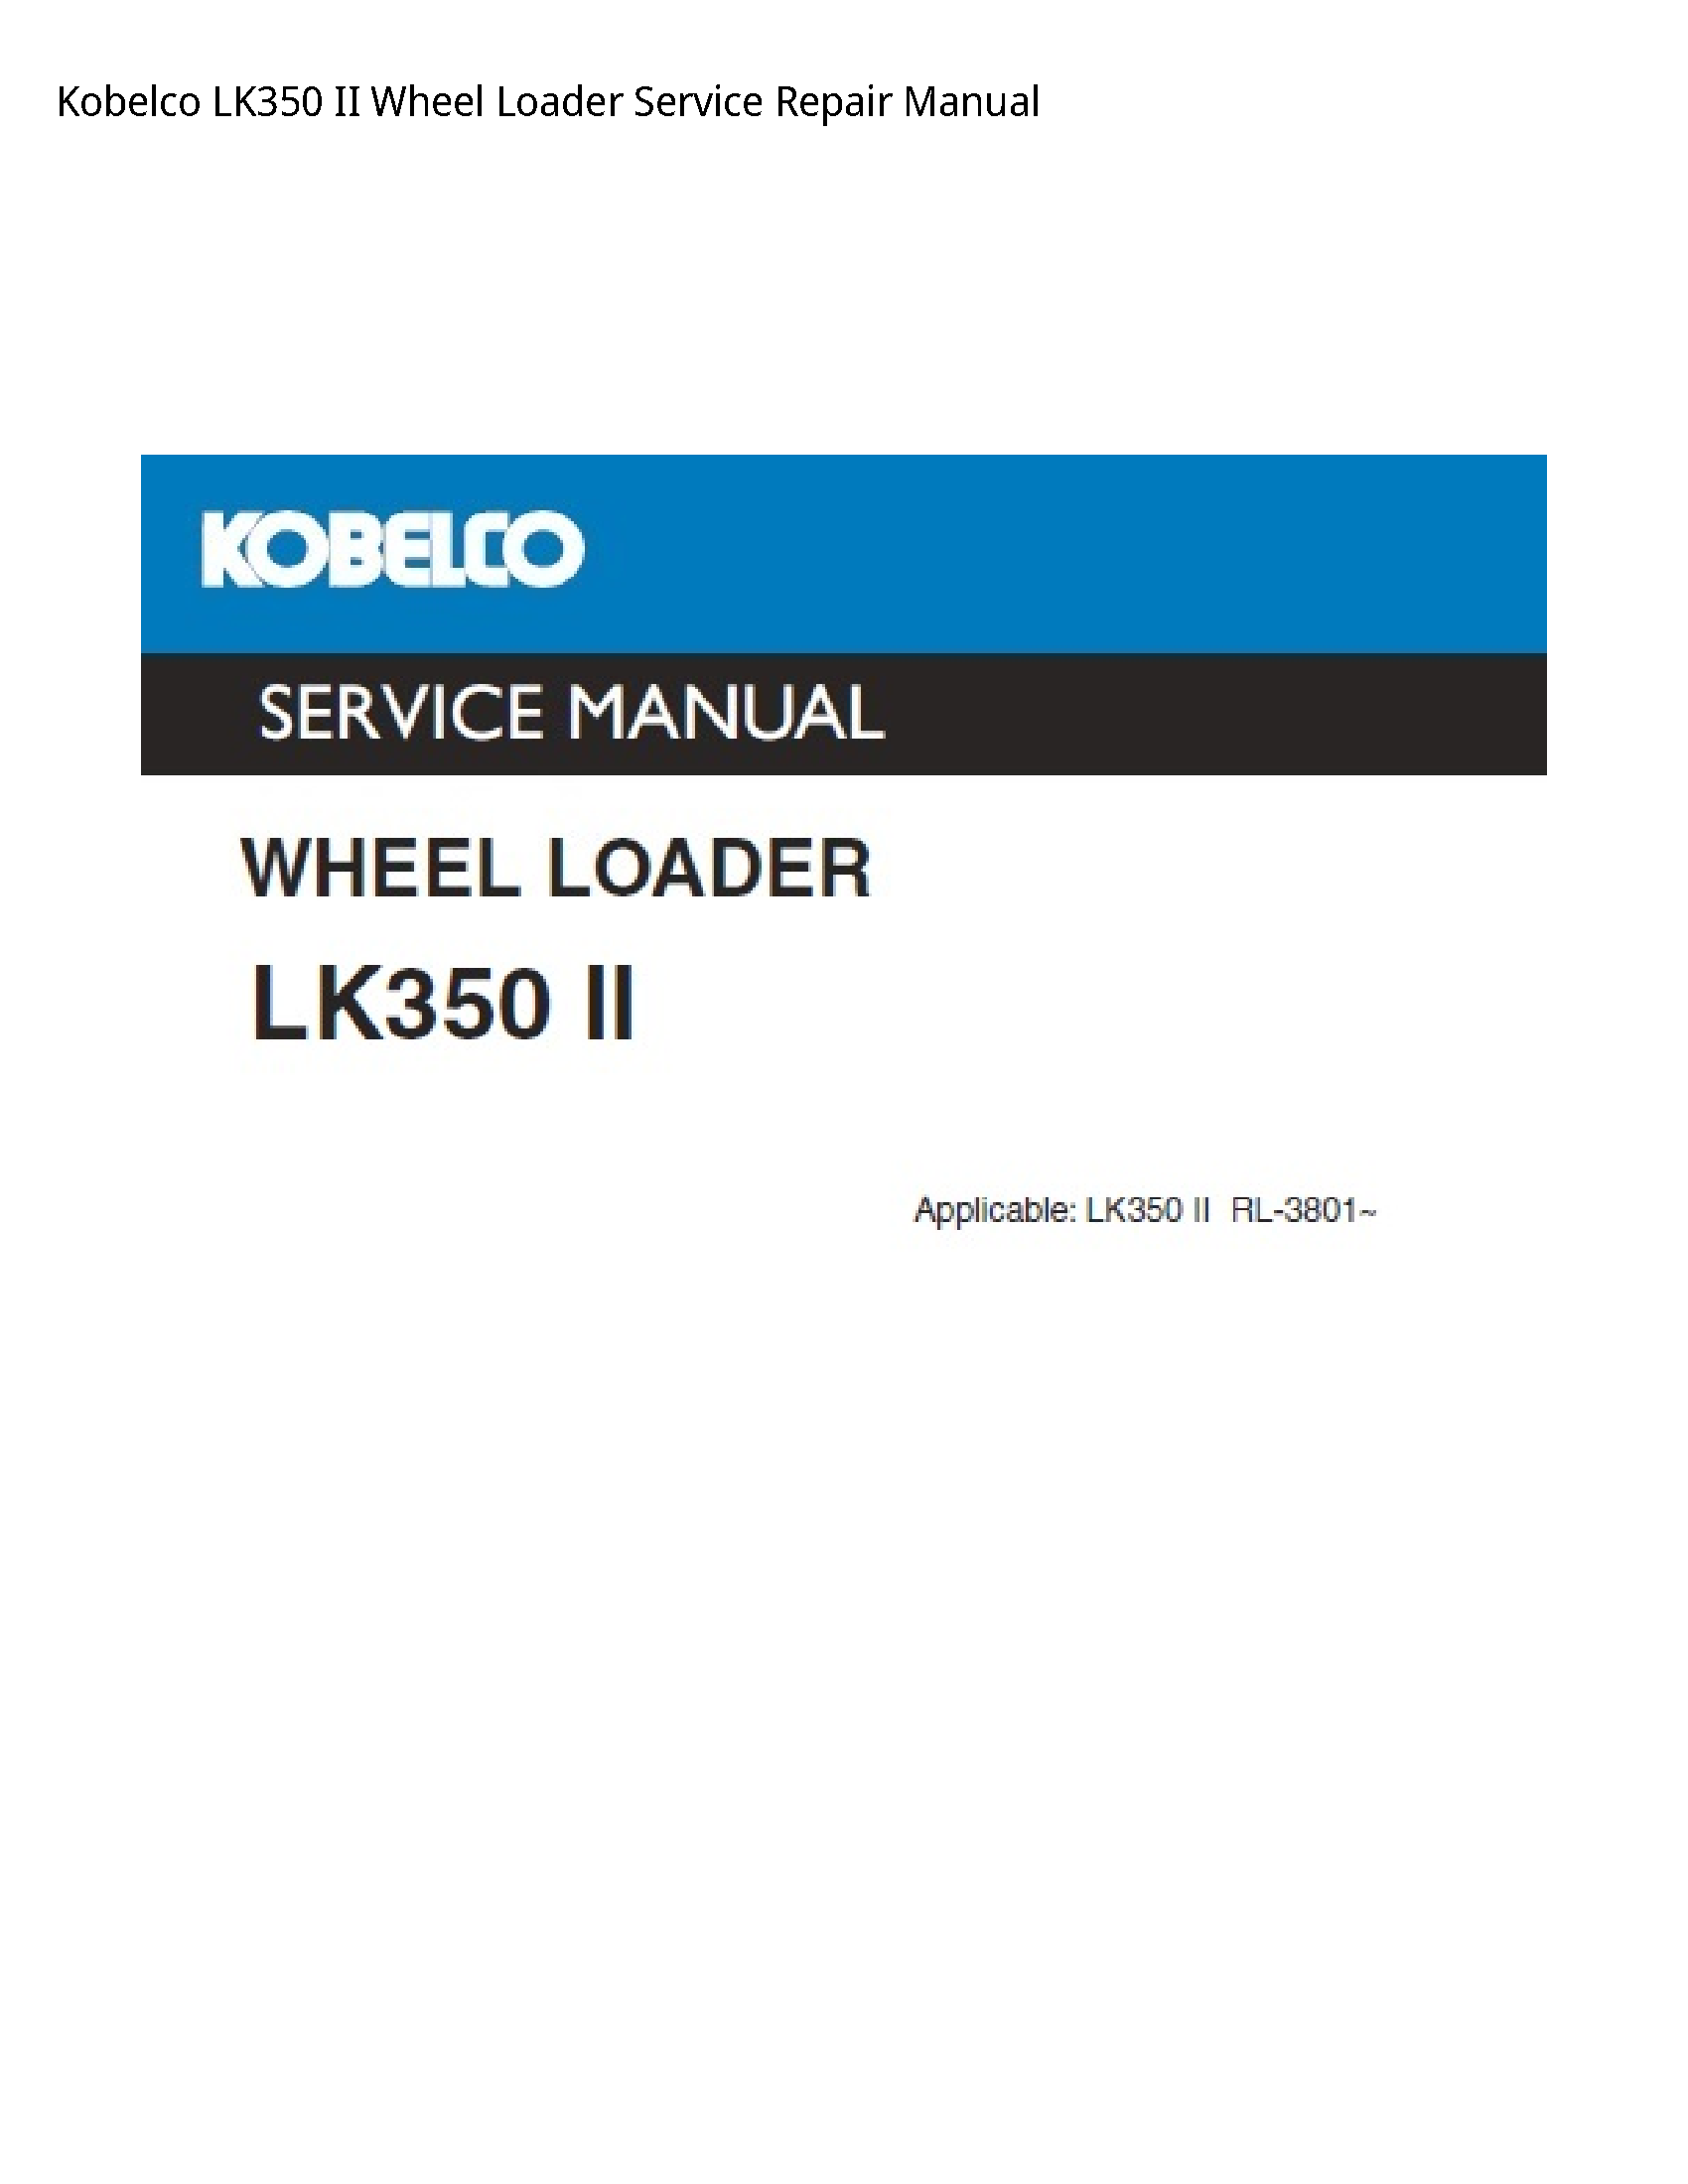 Kobelco LK350 II Wheel Loader manual